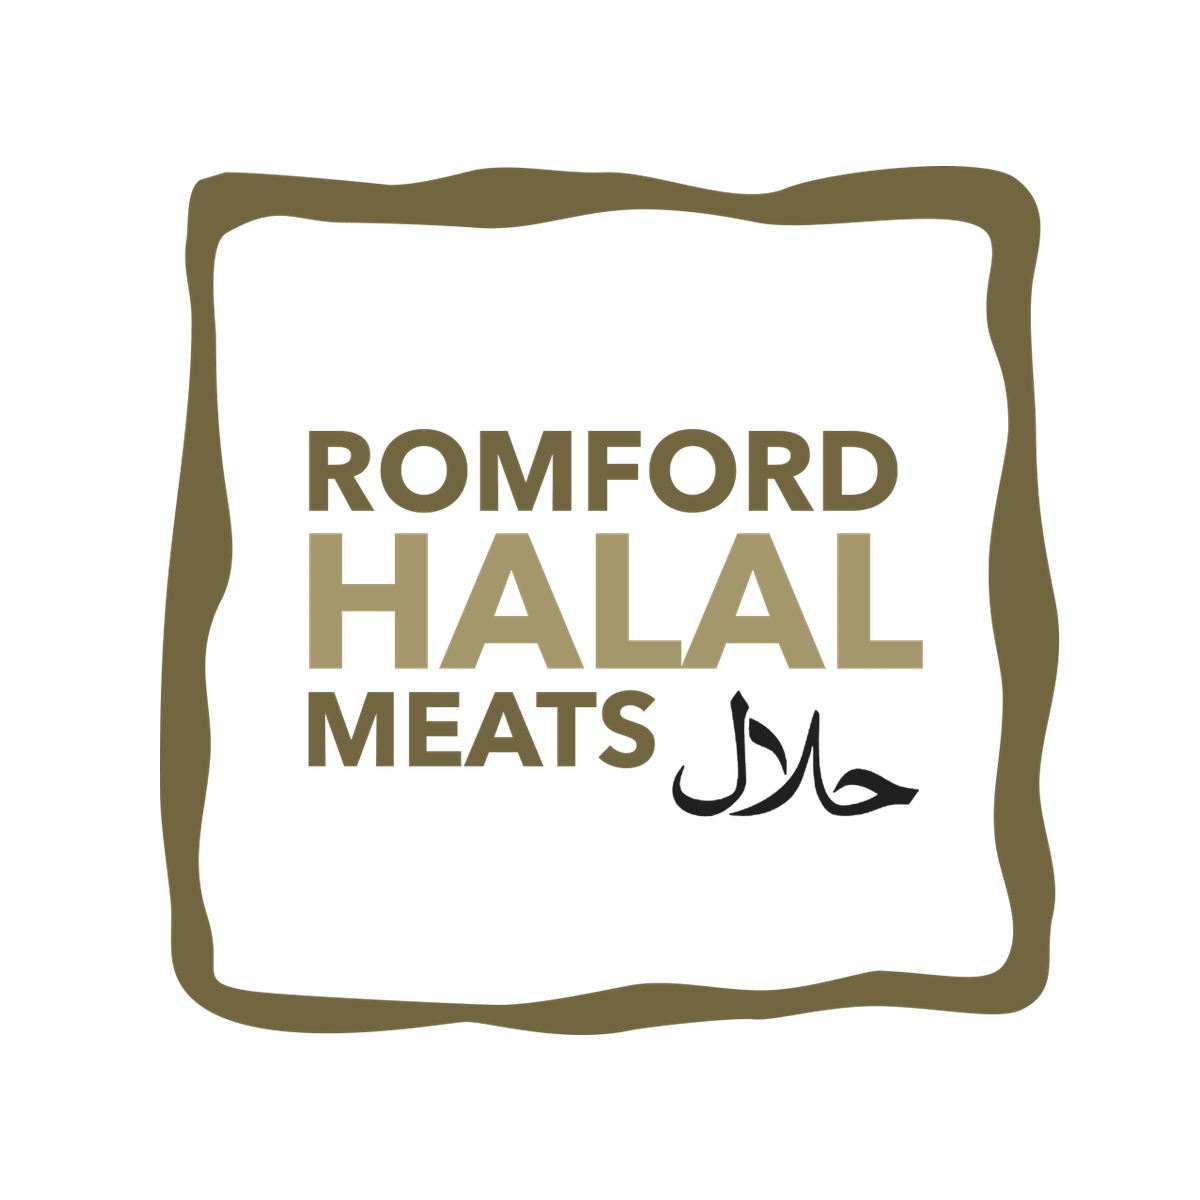 Romford Halal Meats brand logo